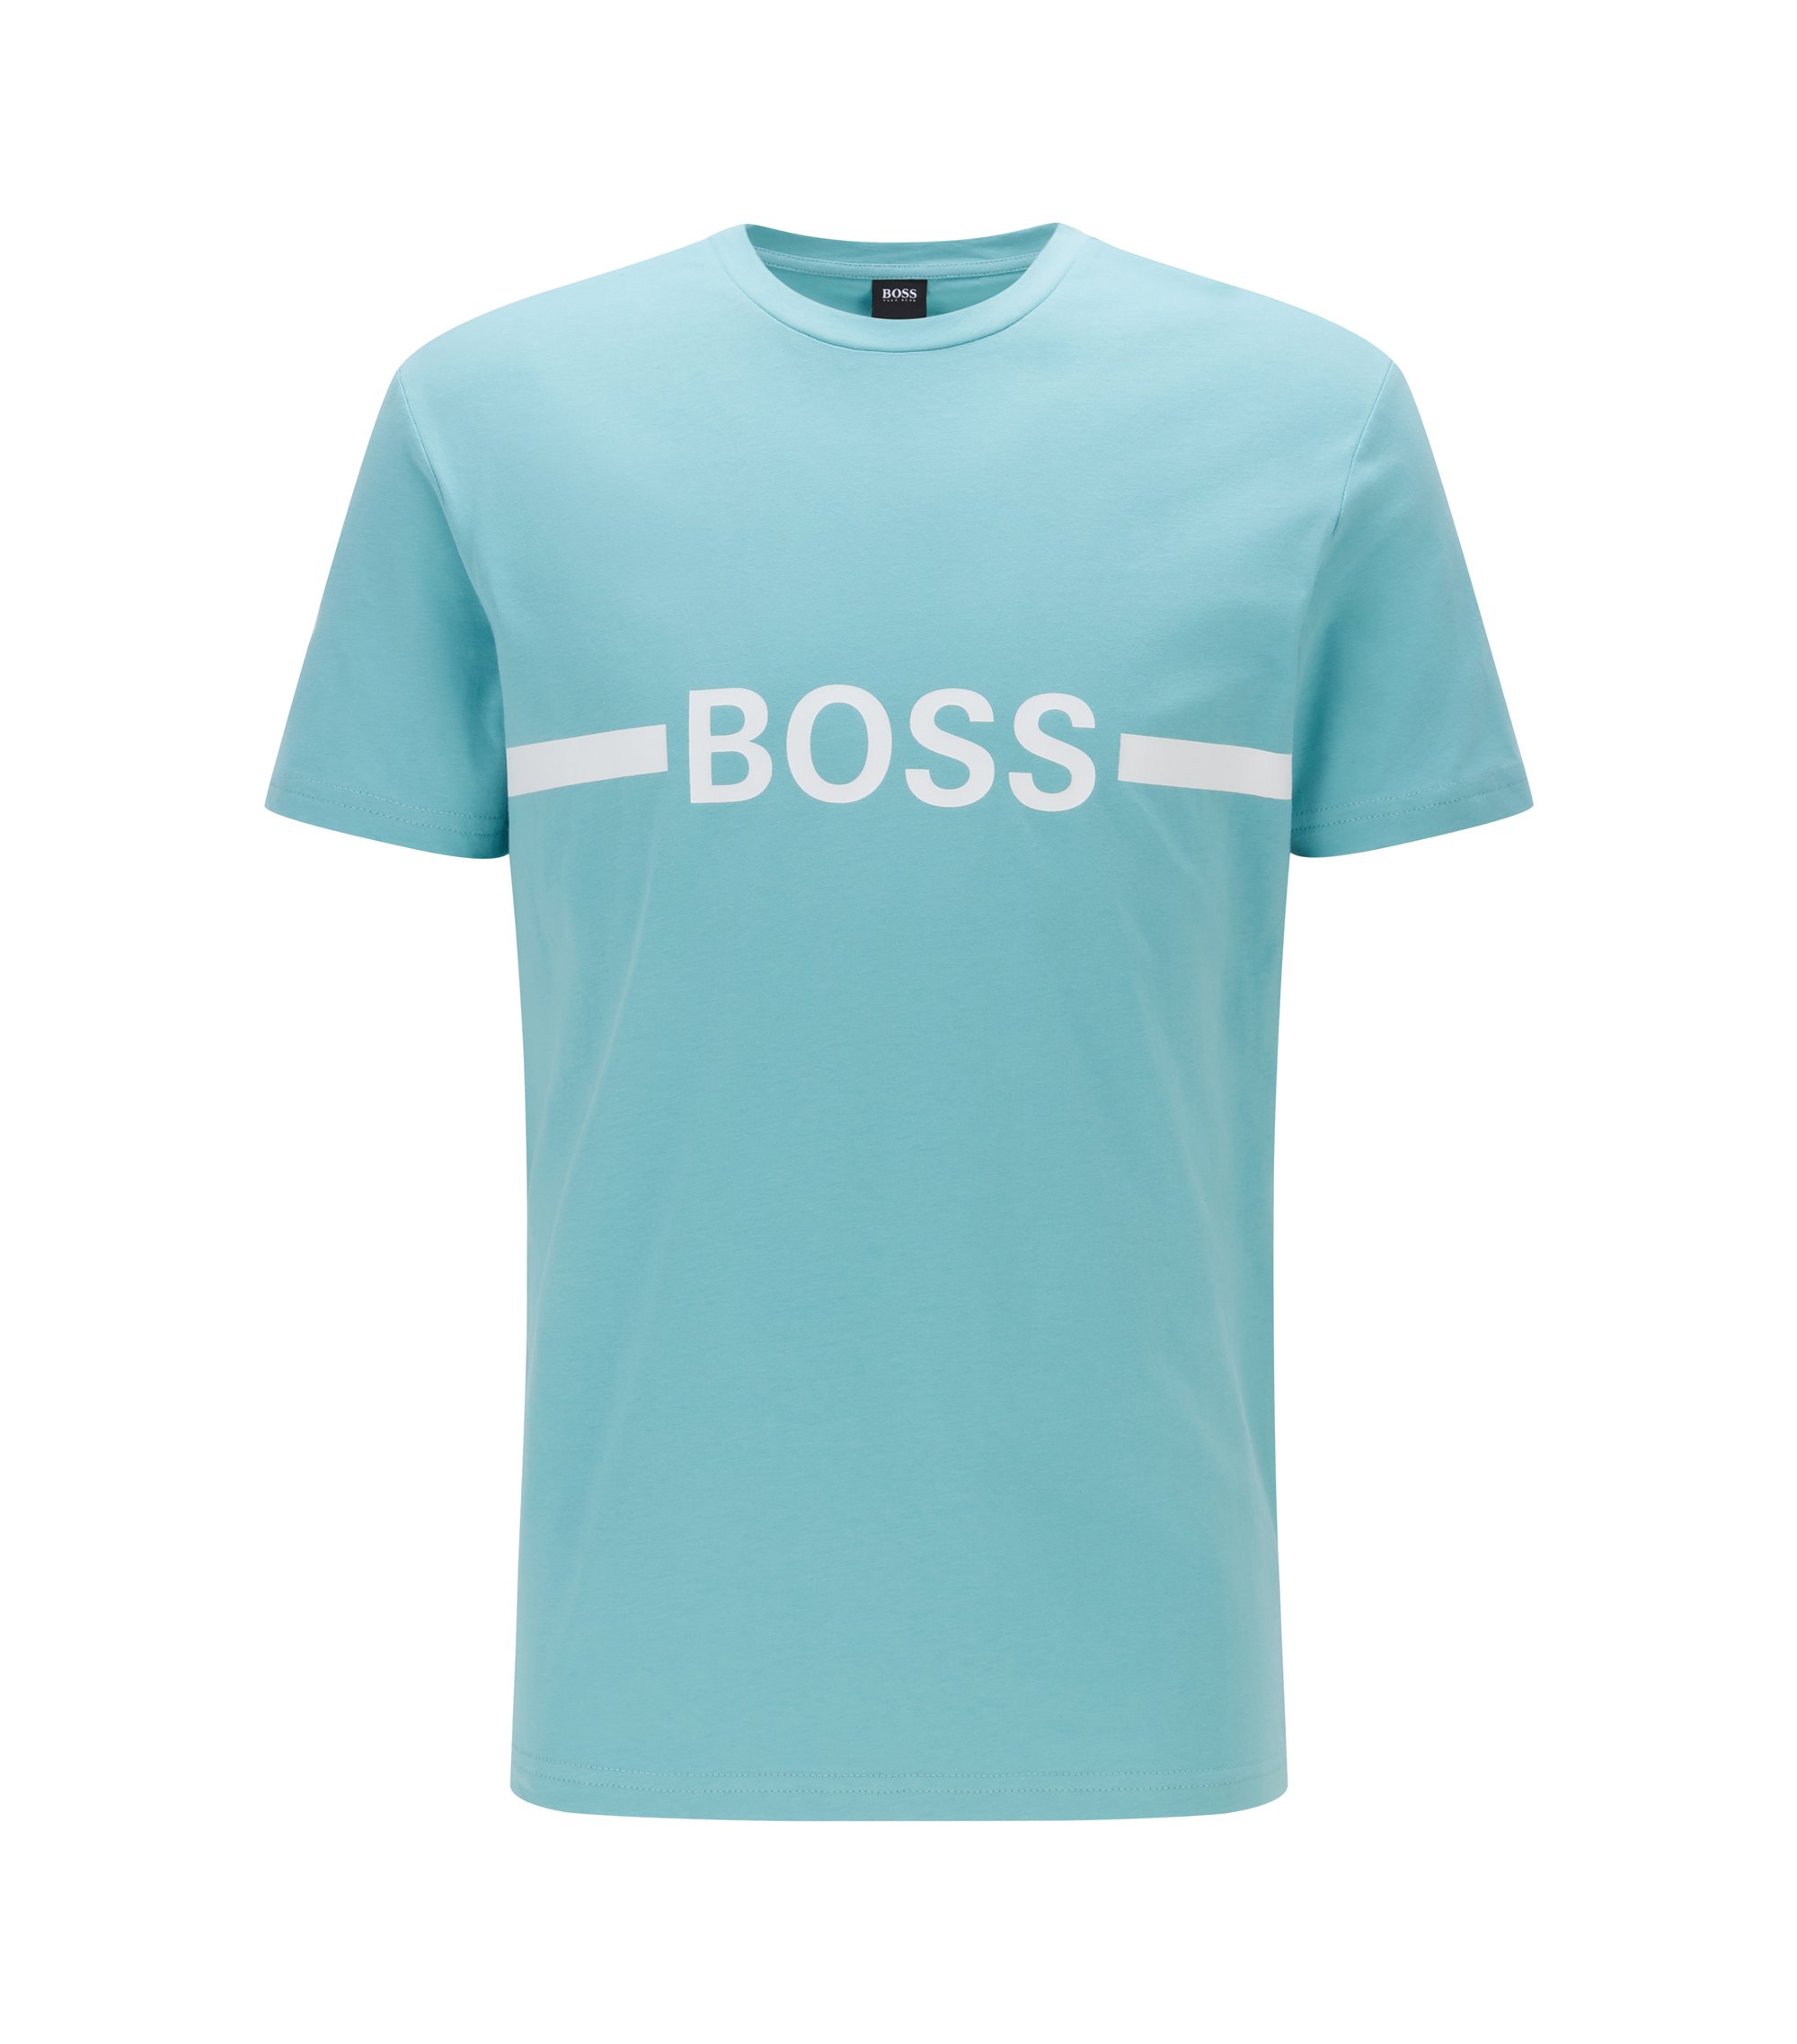 Hugo Boss Tee Cotton Round Neck Turquoise T-Shirt 